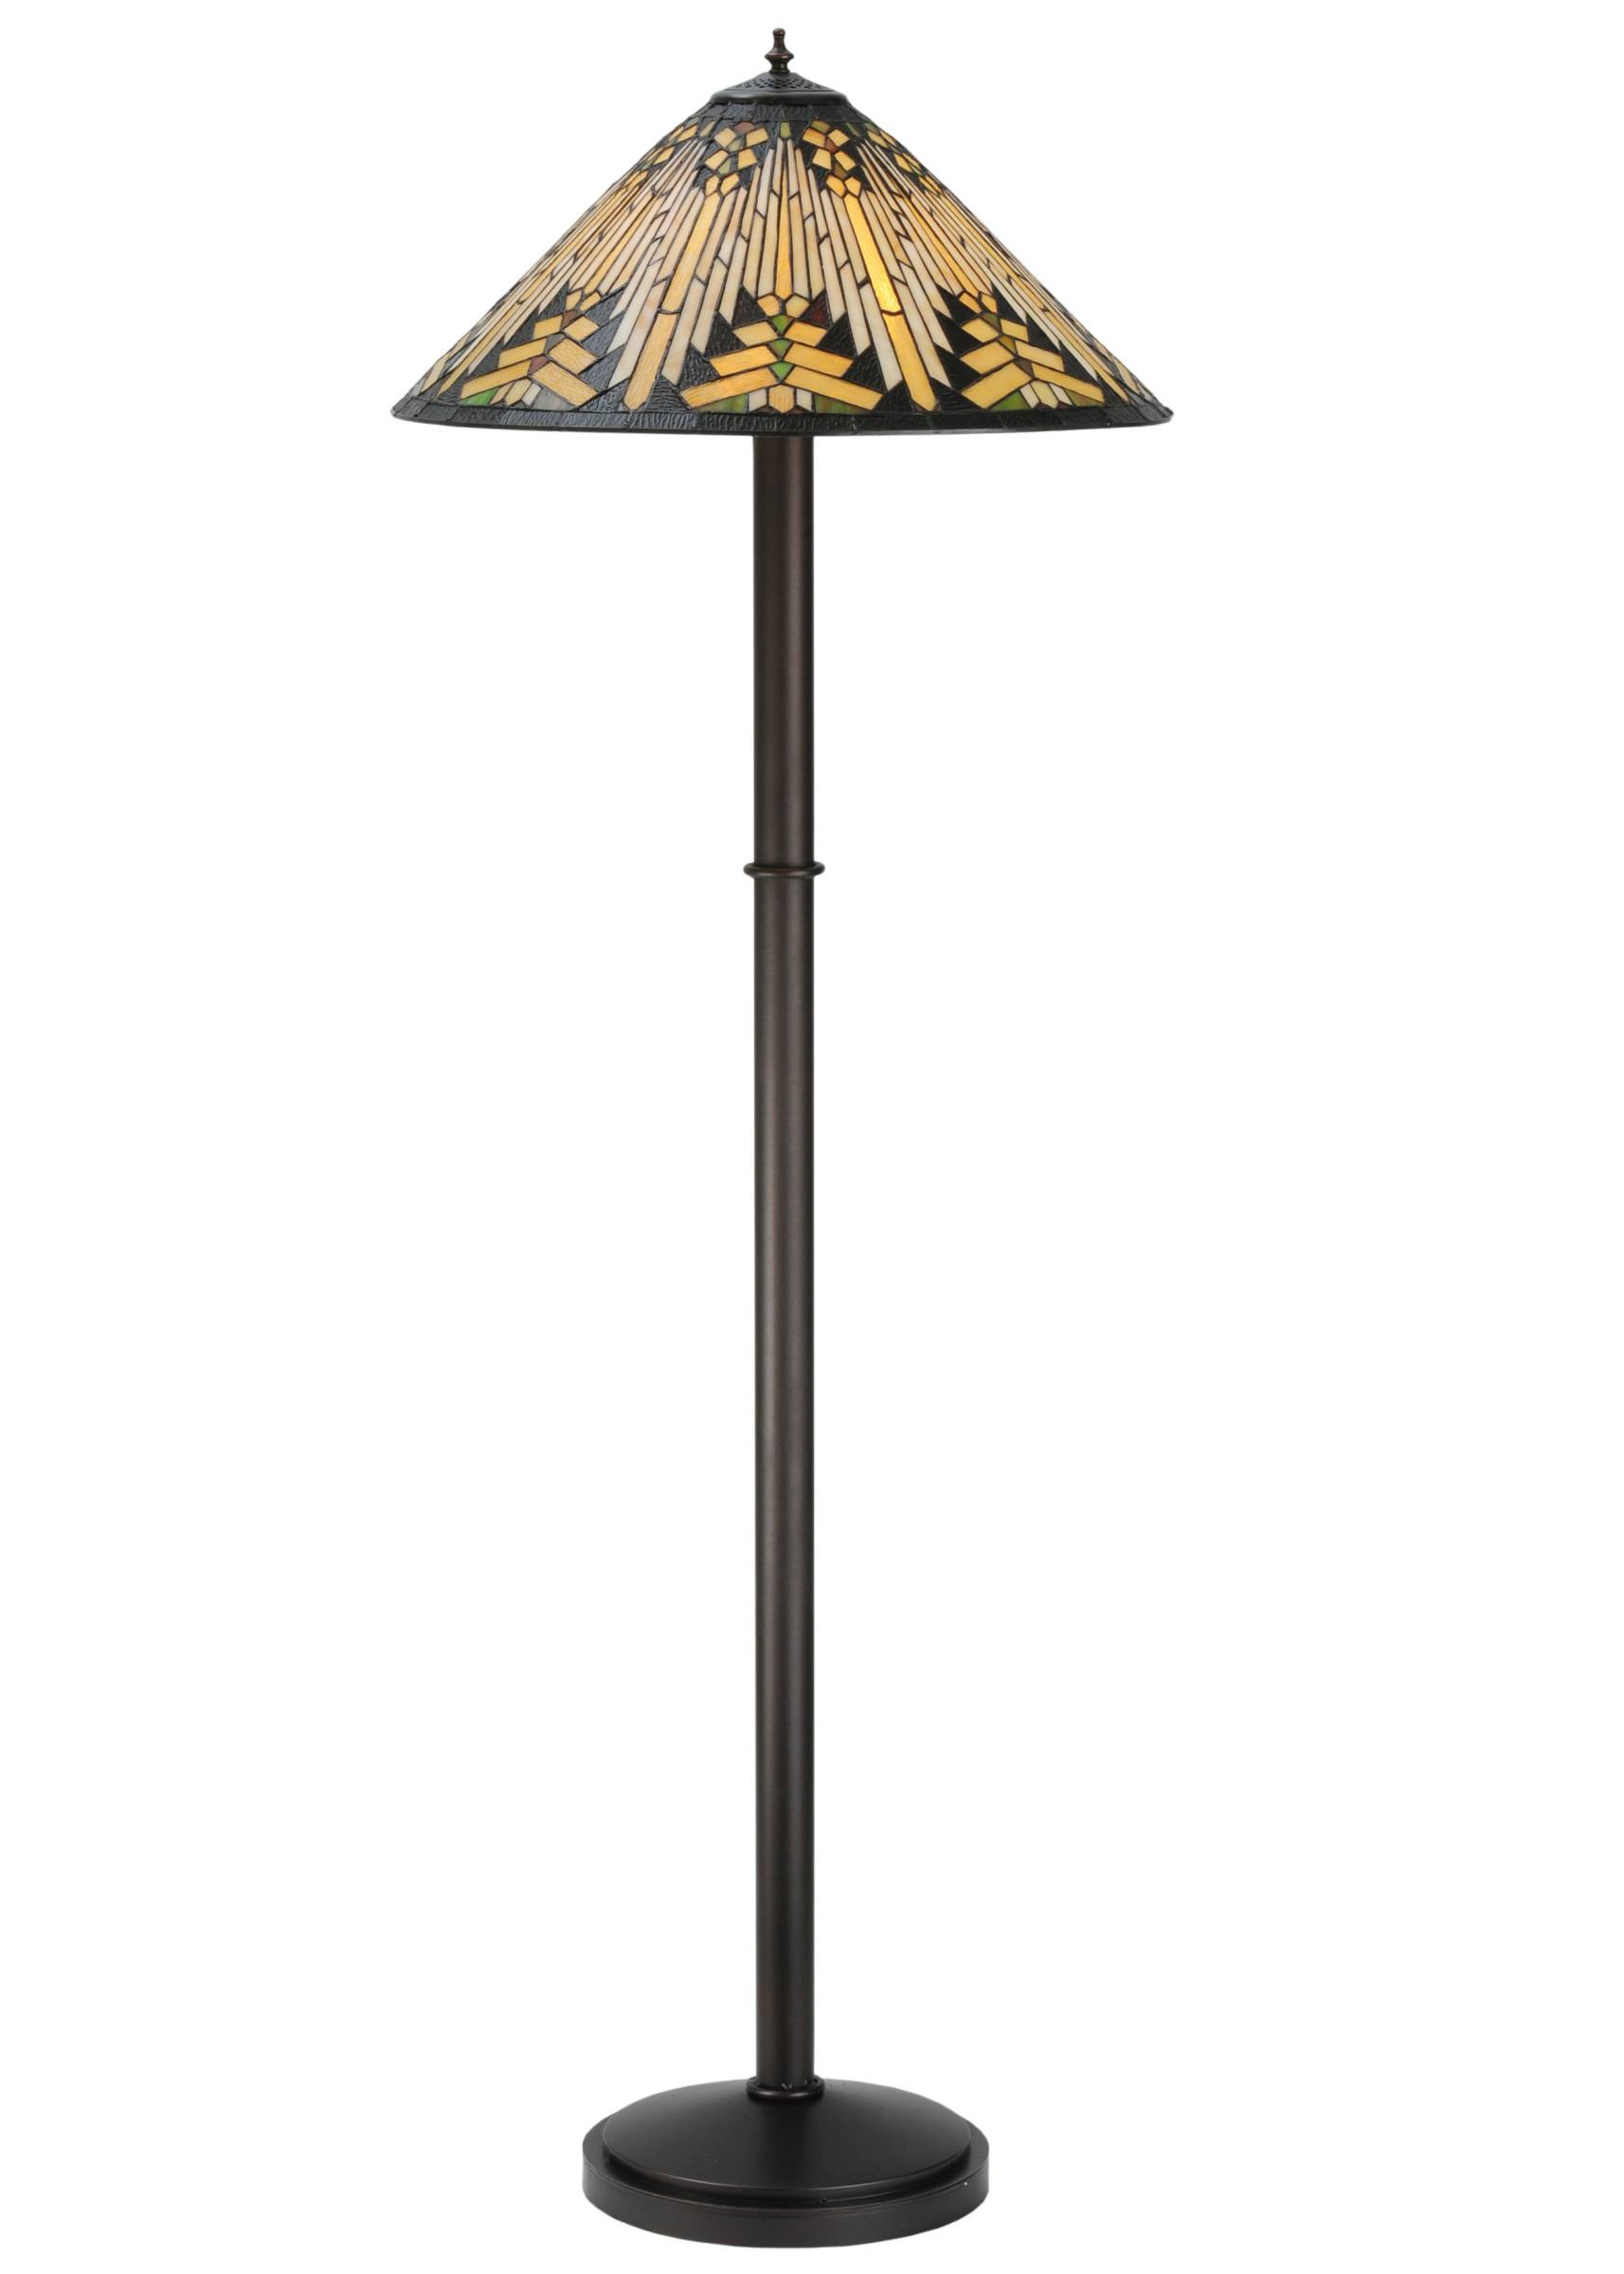 Meyda Tiffany 115434 Nuevo Mission Floor Lamp In Copperfoil with regard to measurements 1714 X 2400